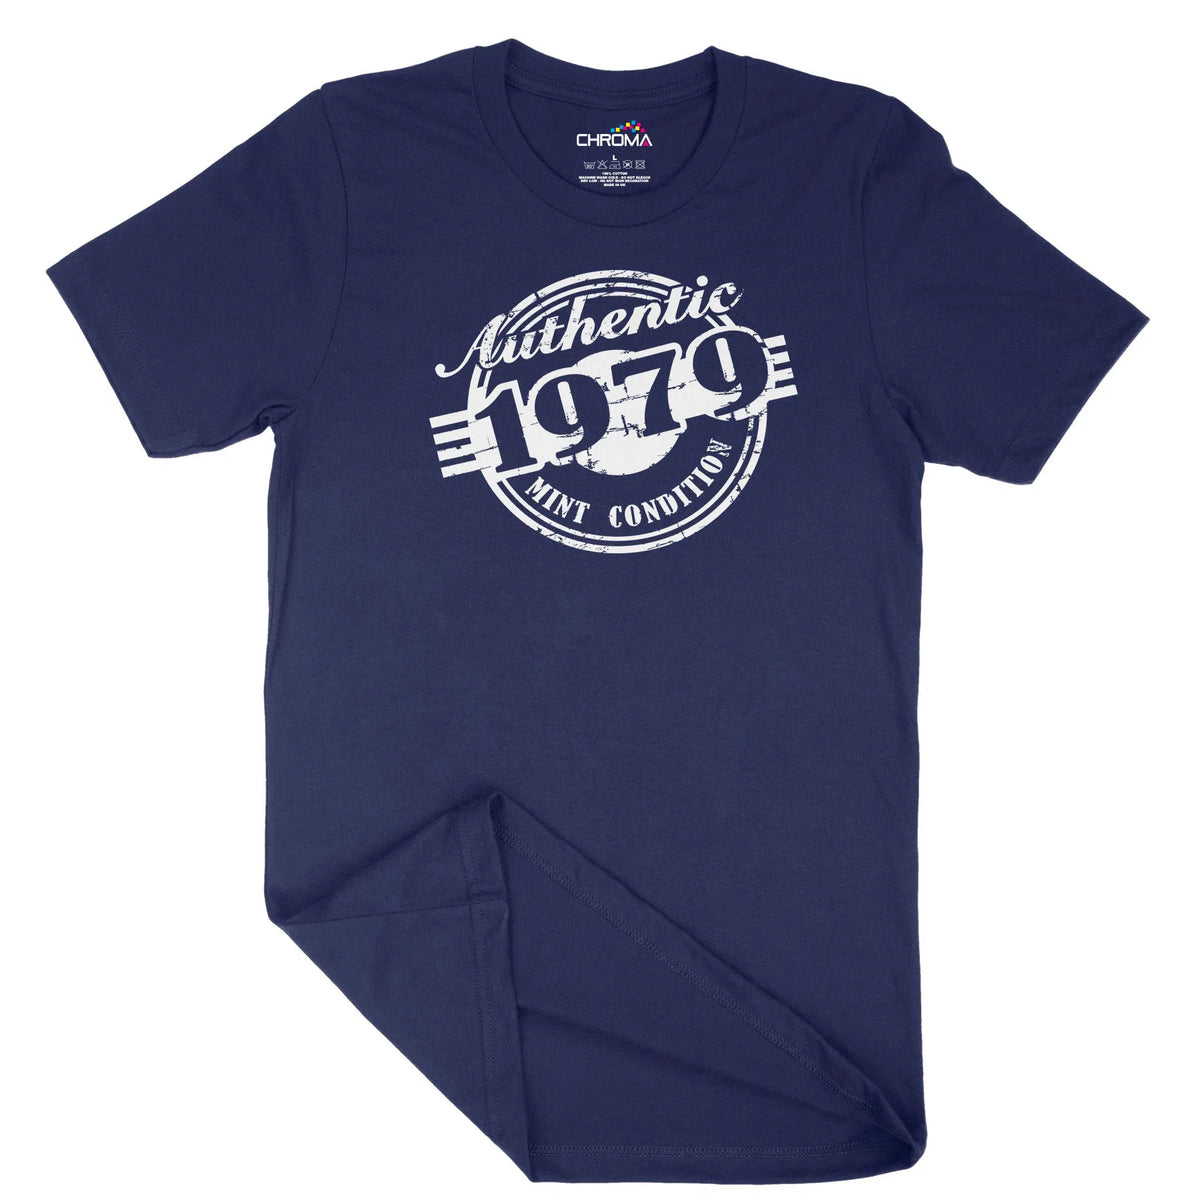 Authentic 1979 Mint Condition Unisex Adult T-Shirt | Quality Slogan Cl Chroma Clothing